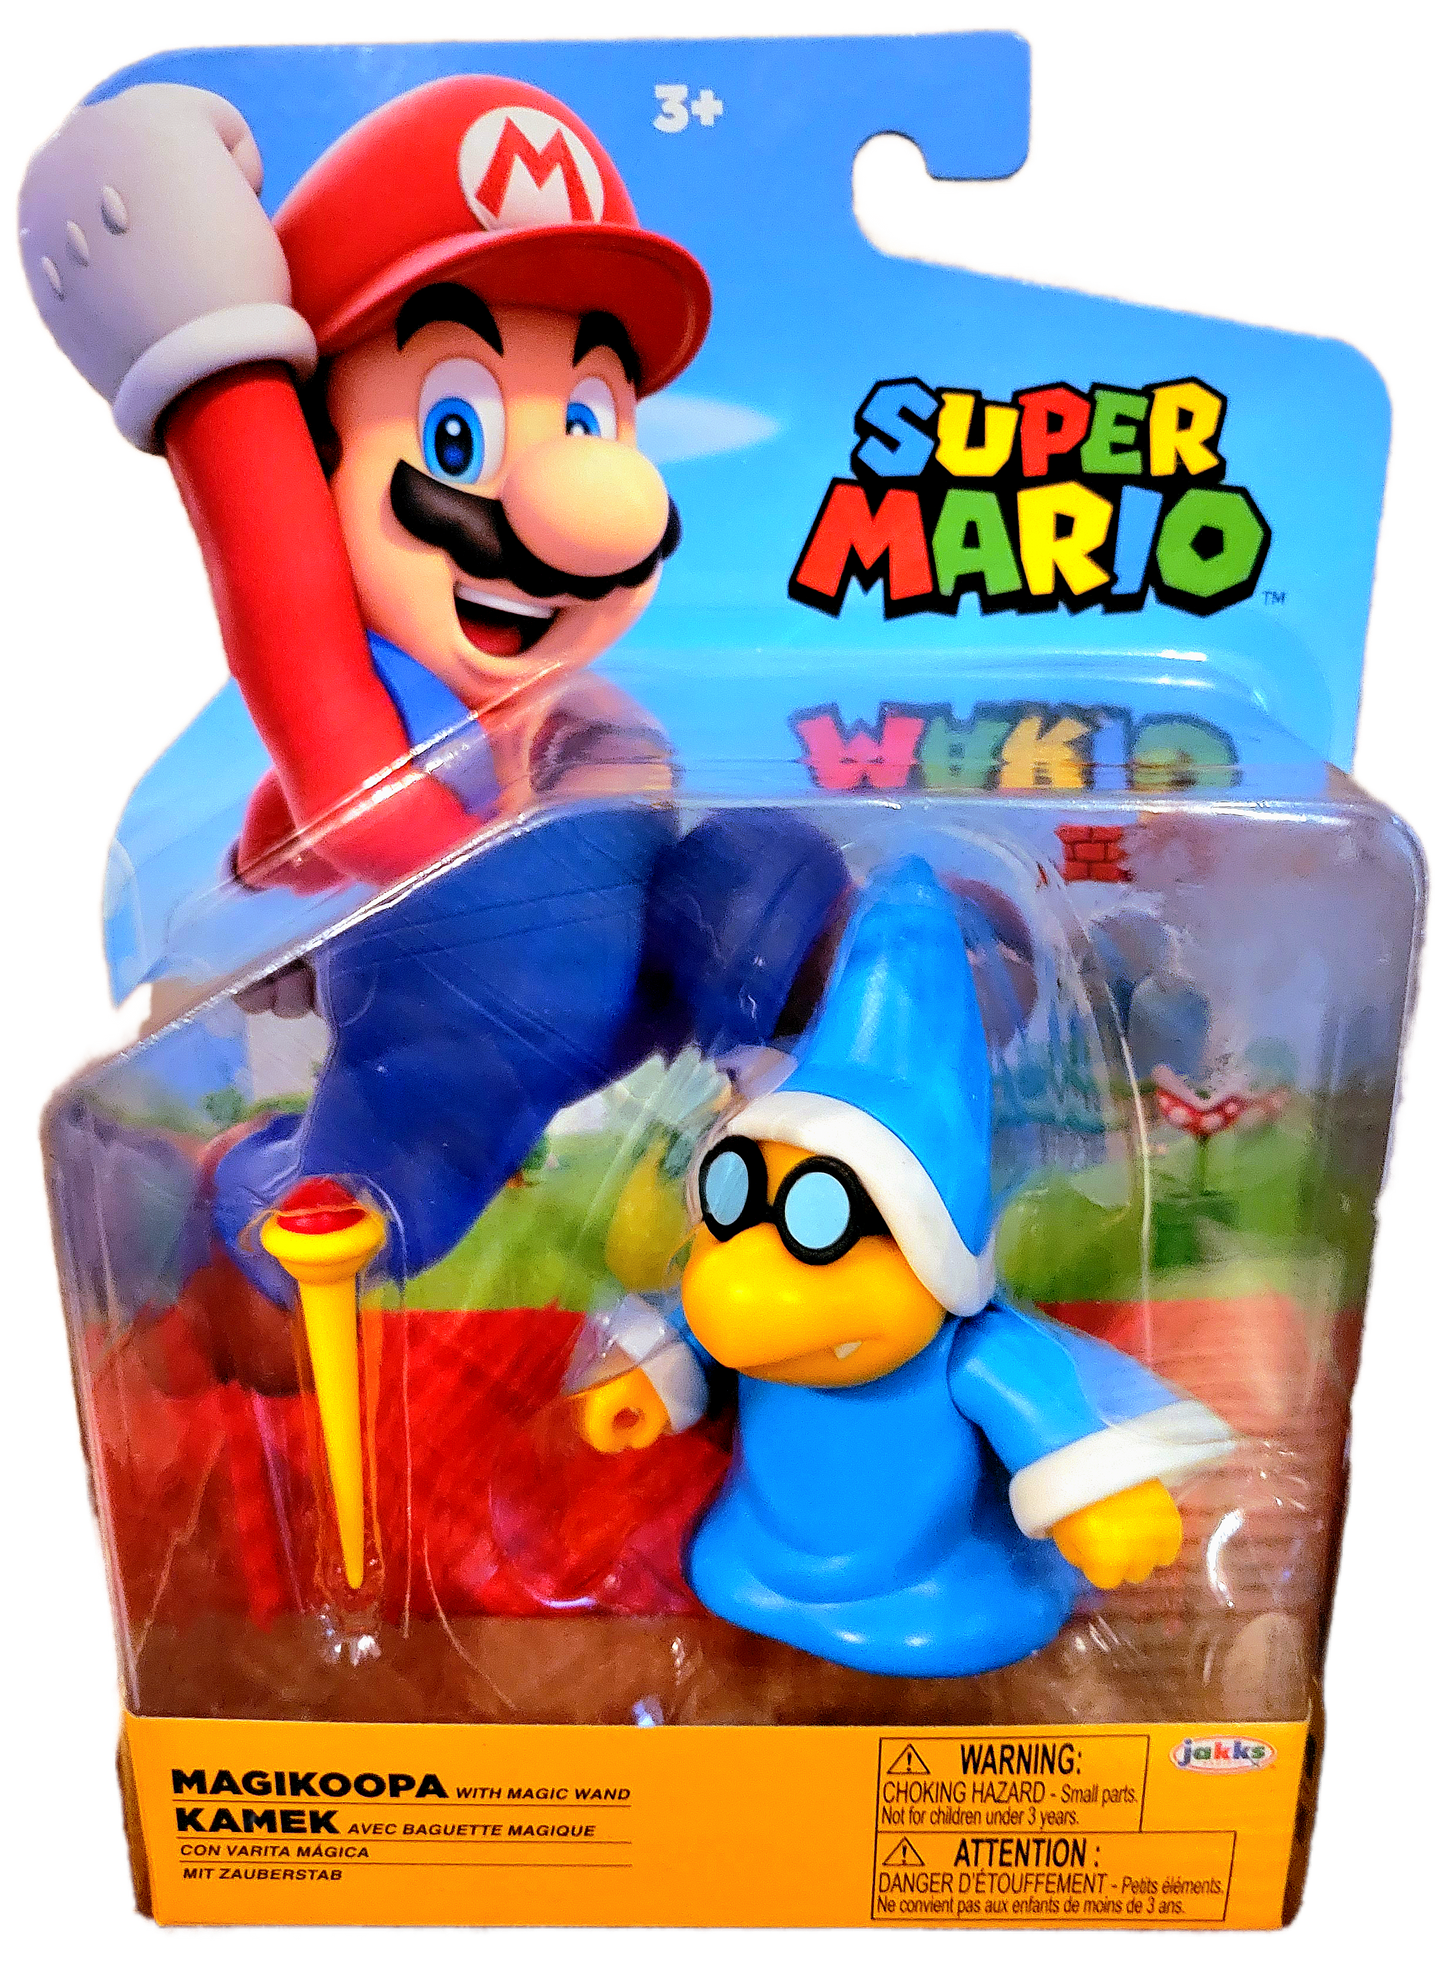 Jakks Pacific Nintendo Super Mario Magikoopa Kamek with Magic Wand 4 Inch Action Figure